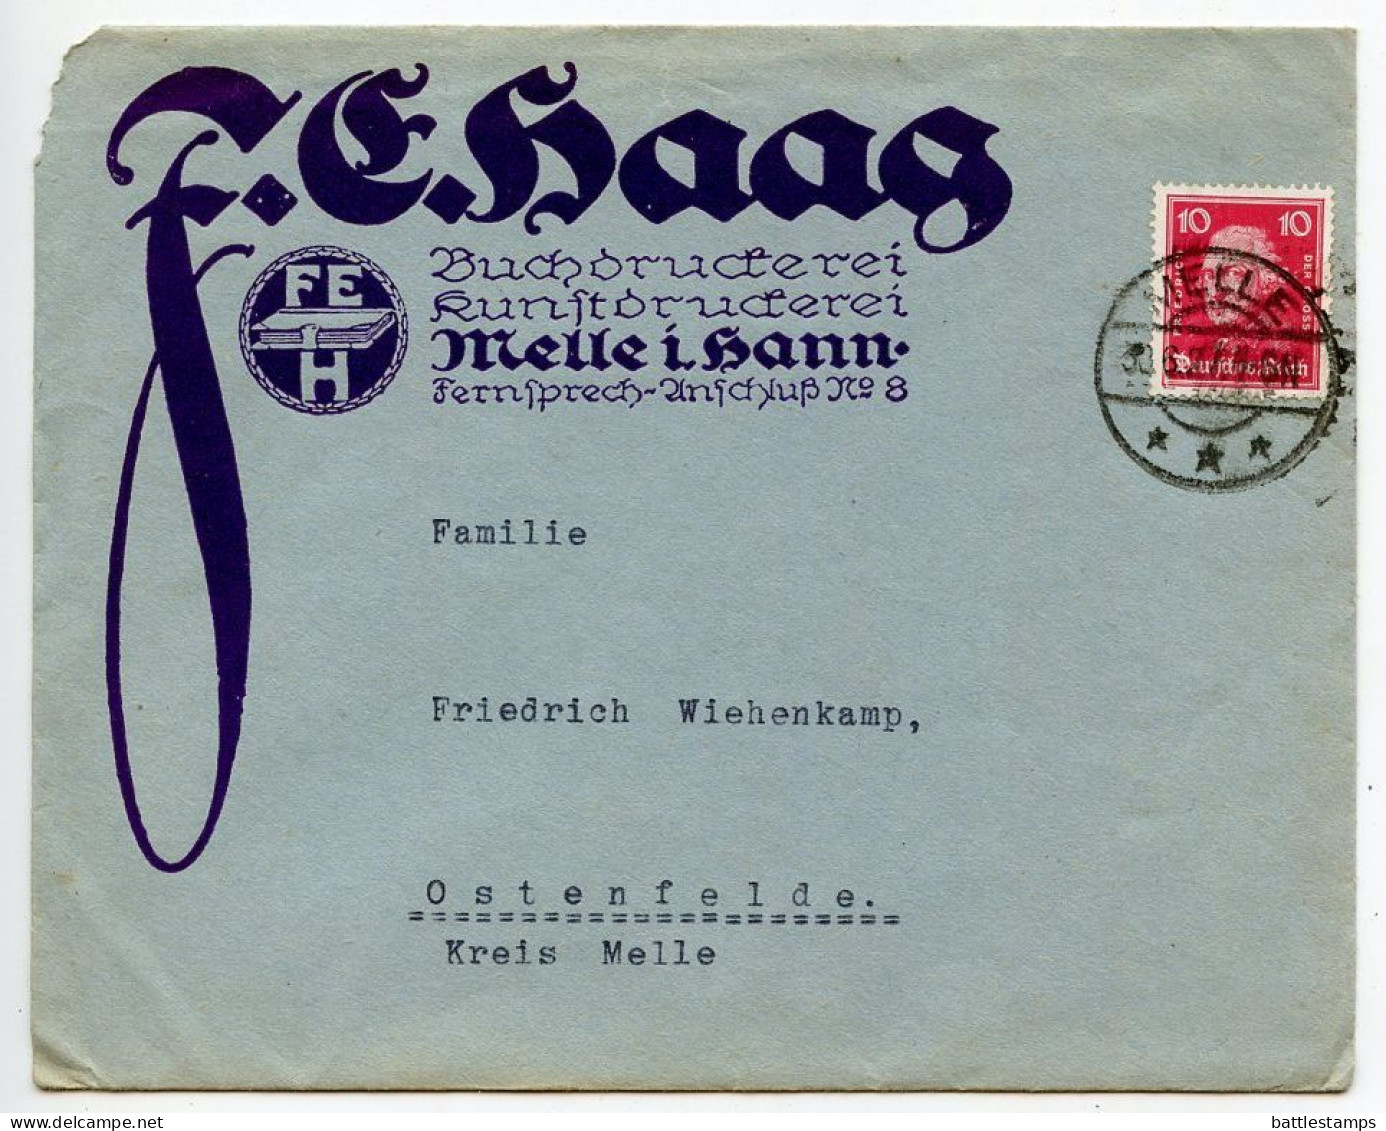 Germany 1927 Cover W/ Invoice & Receipt; Melle - F.E. Haag Buchdruckerei Kunstdruckerei; 10pf. Frederick The Great - Covers & Documents